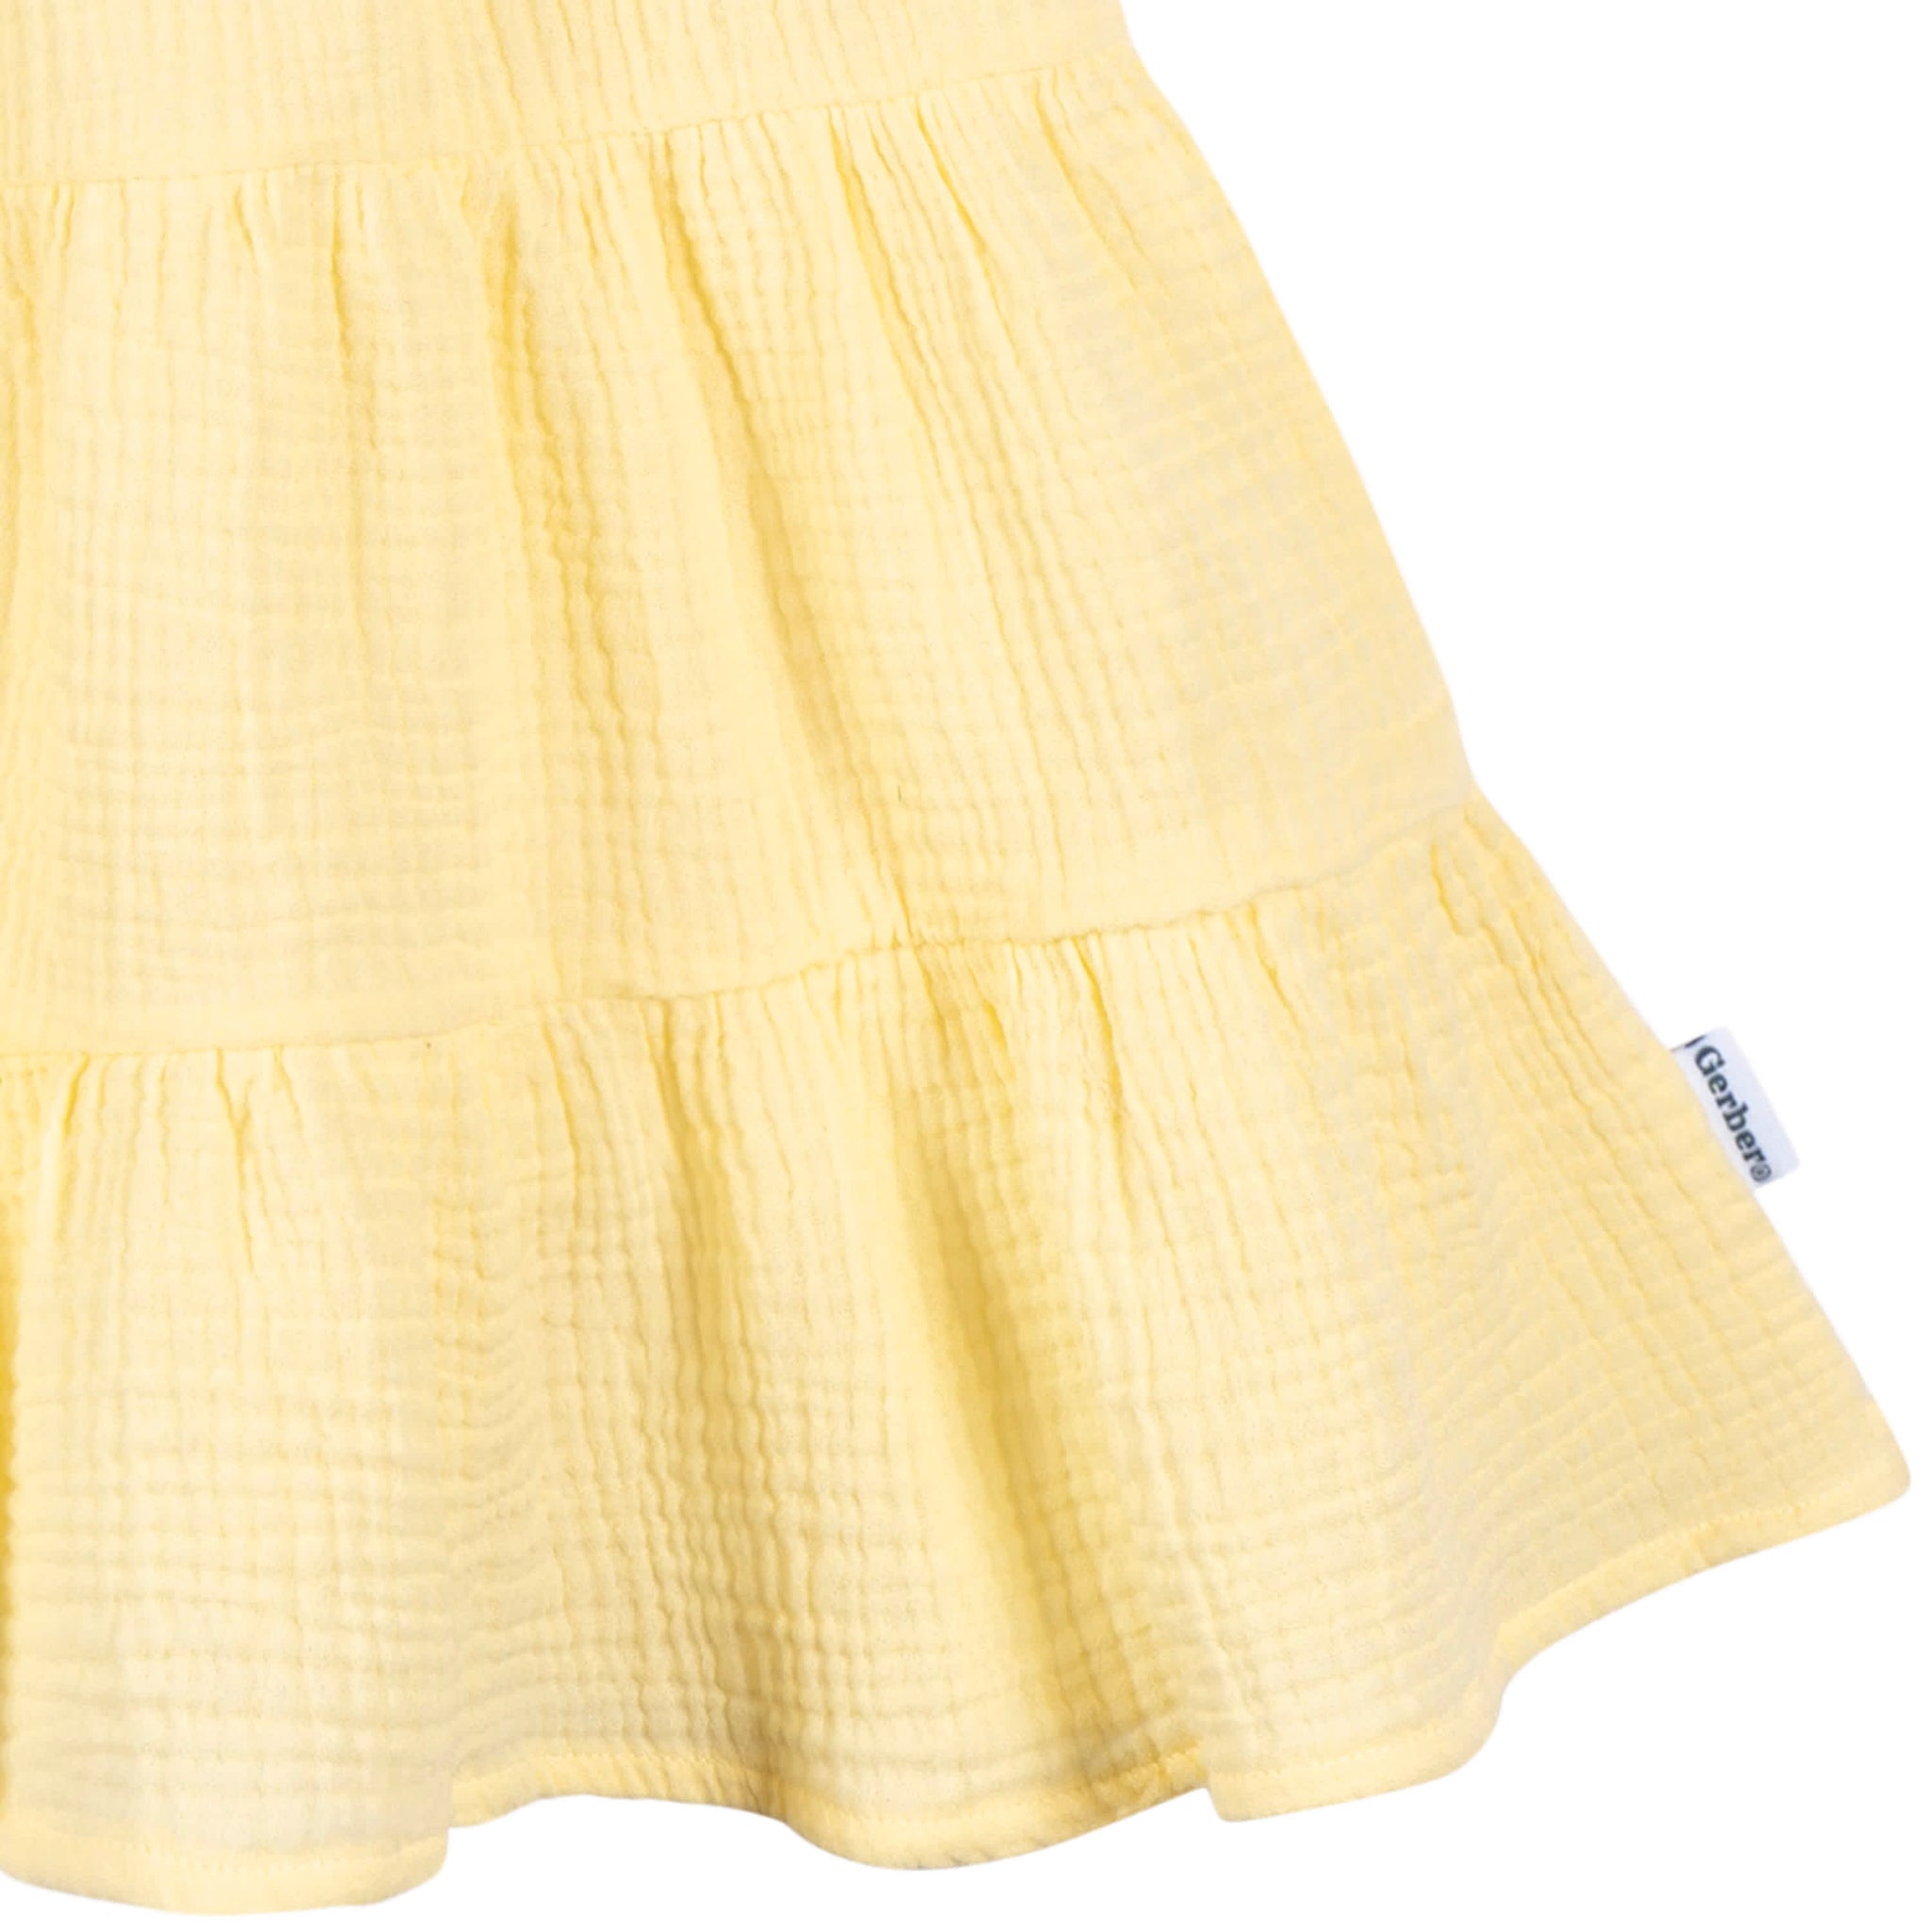 Toddler Girls Yellow Tiered Dress-Gerber Childrenswear Wholesale